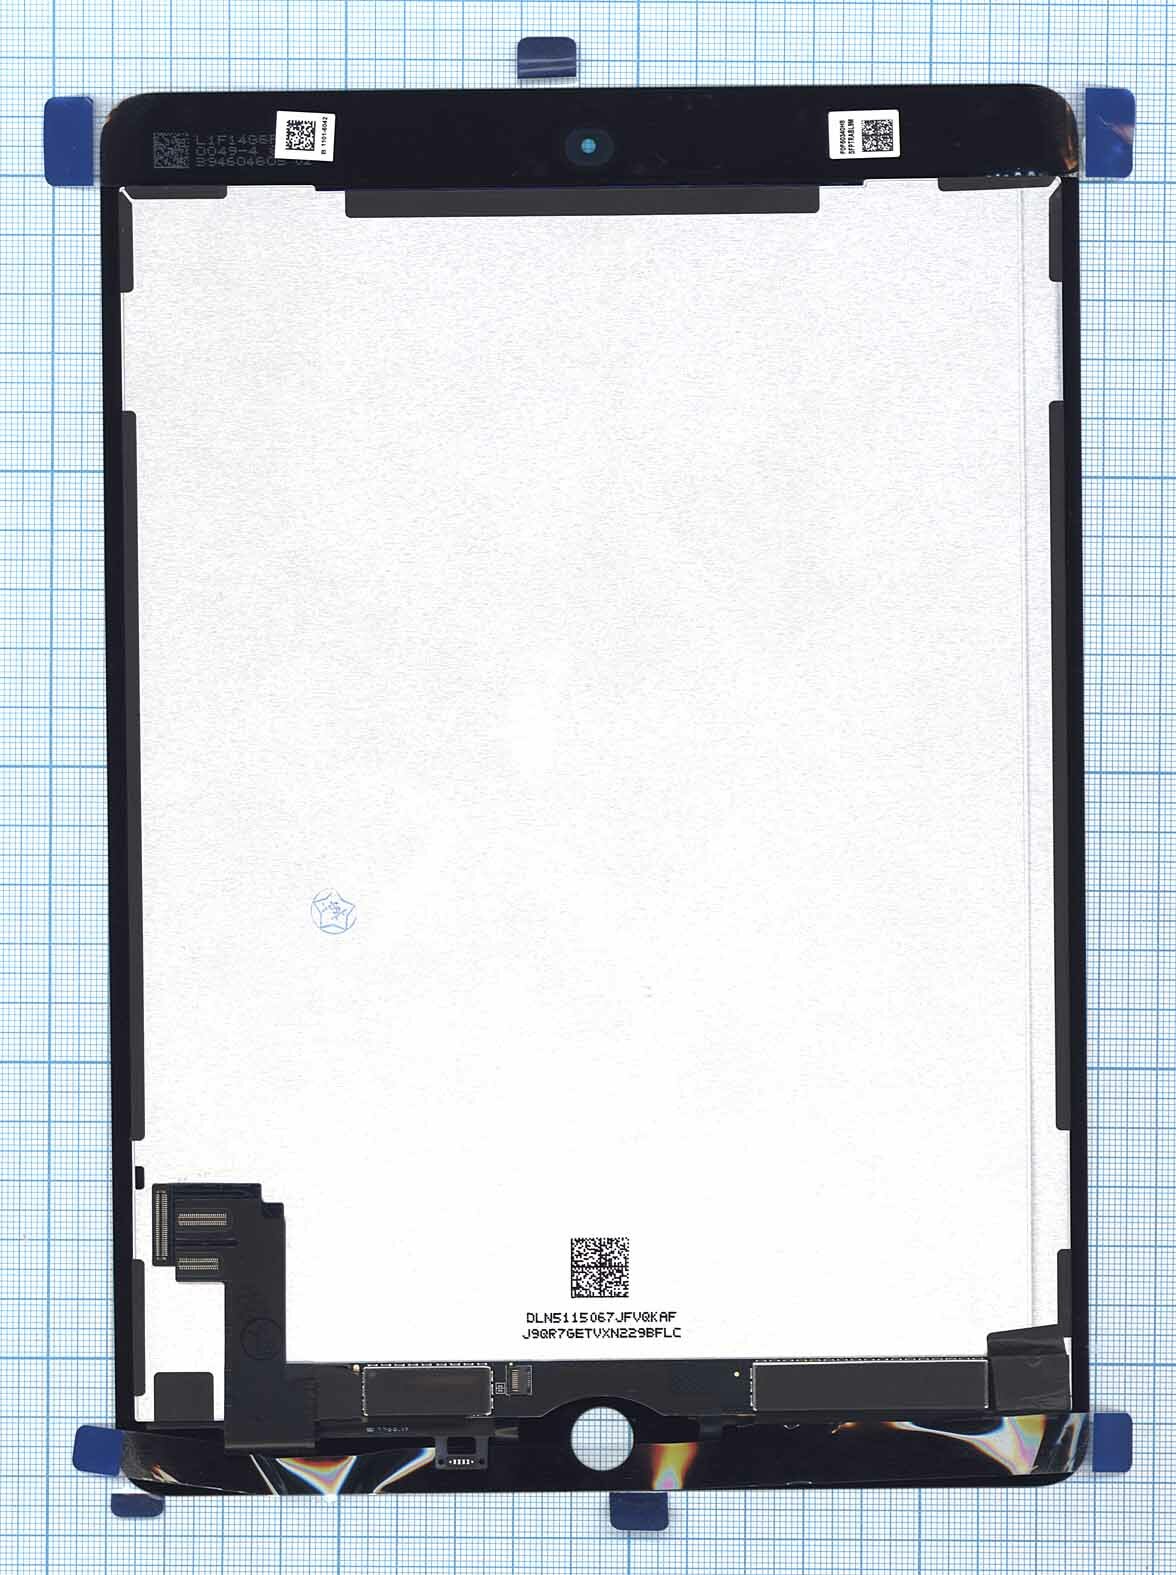 Модуль (матрица + тачскрин) для iPad Air 2 (A1566, A1567) черный